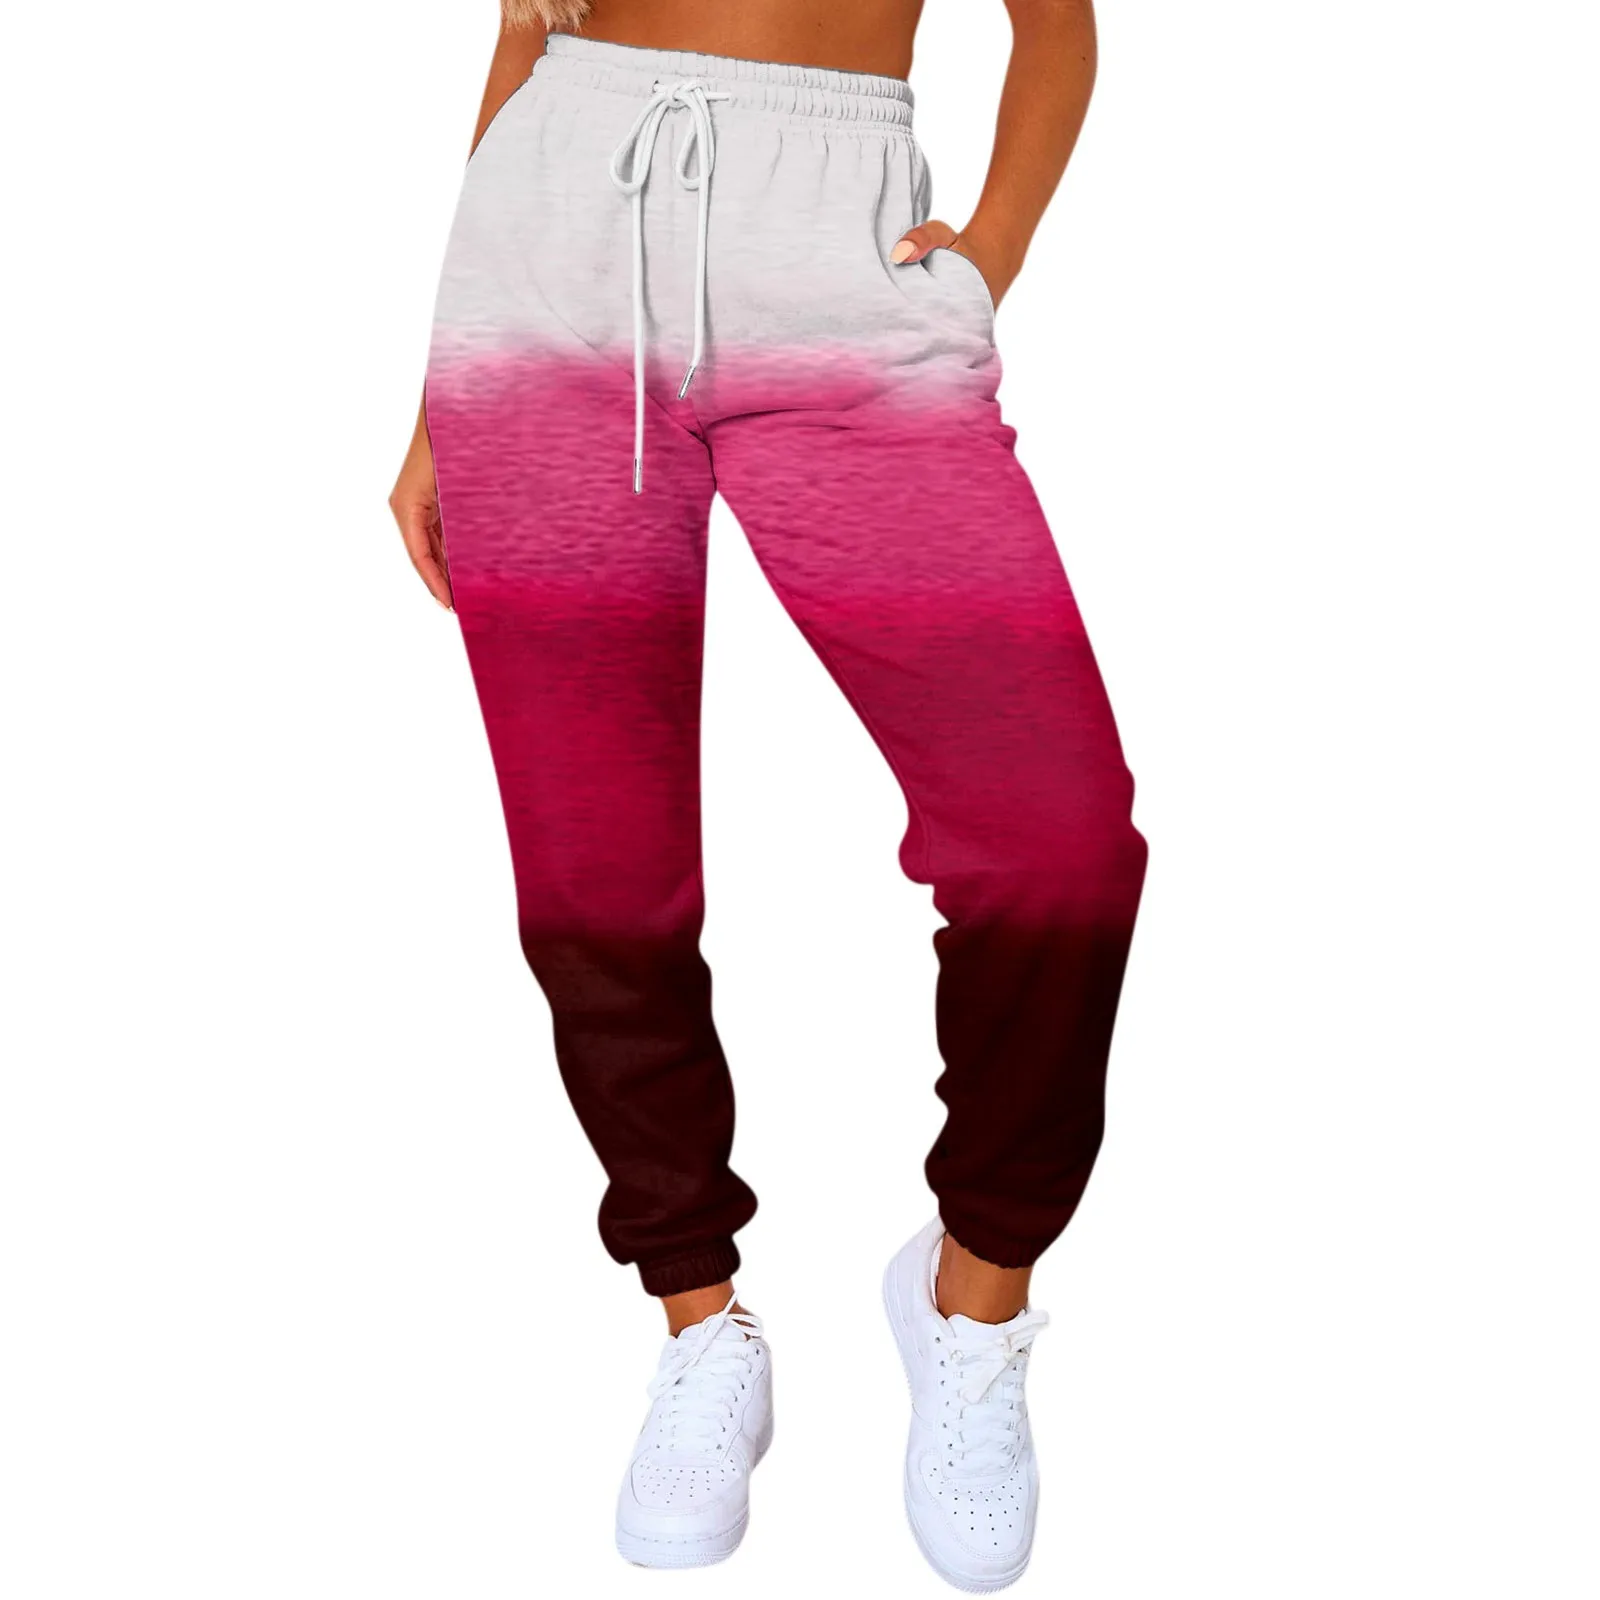 

Womens Fashion Sport Printed Drawstring Pocket Casual Sweatpants Pants Workout Athletic Bottom Joggers Pants Trousers Pantalones